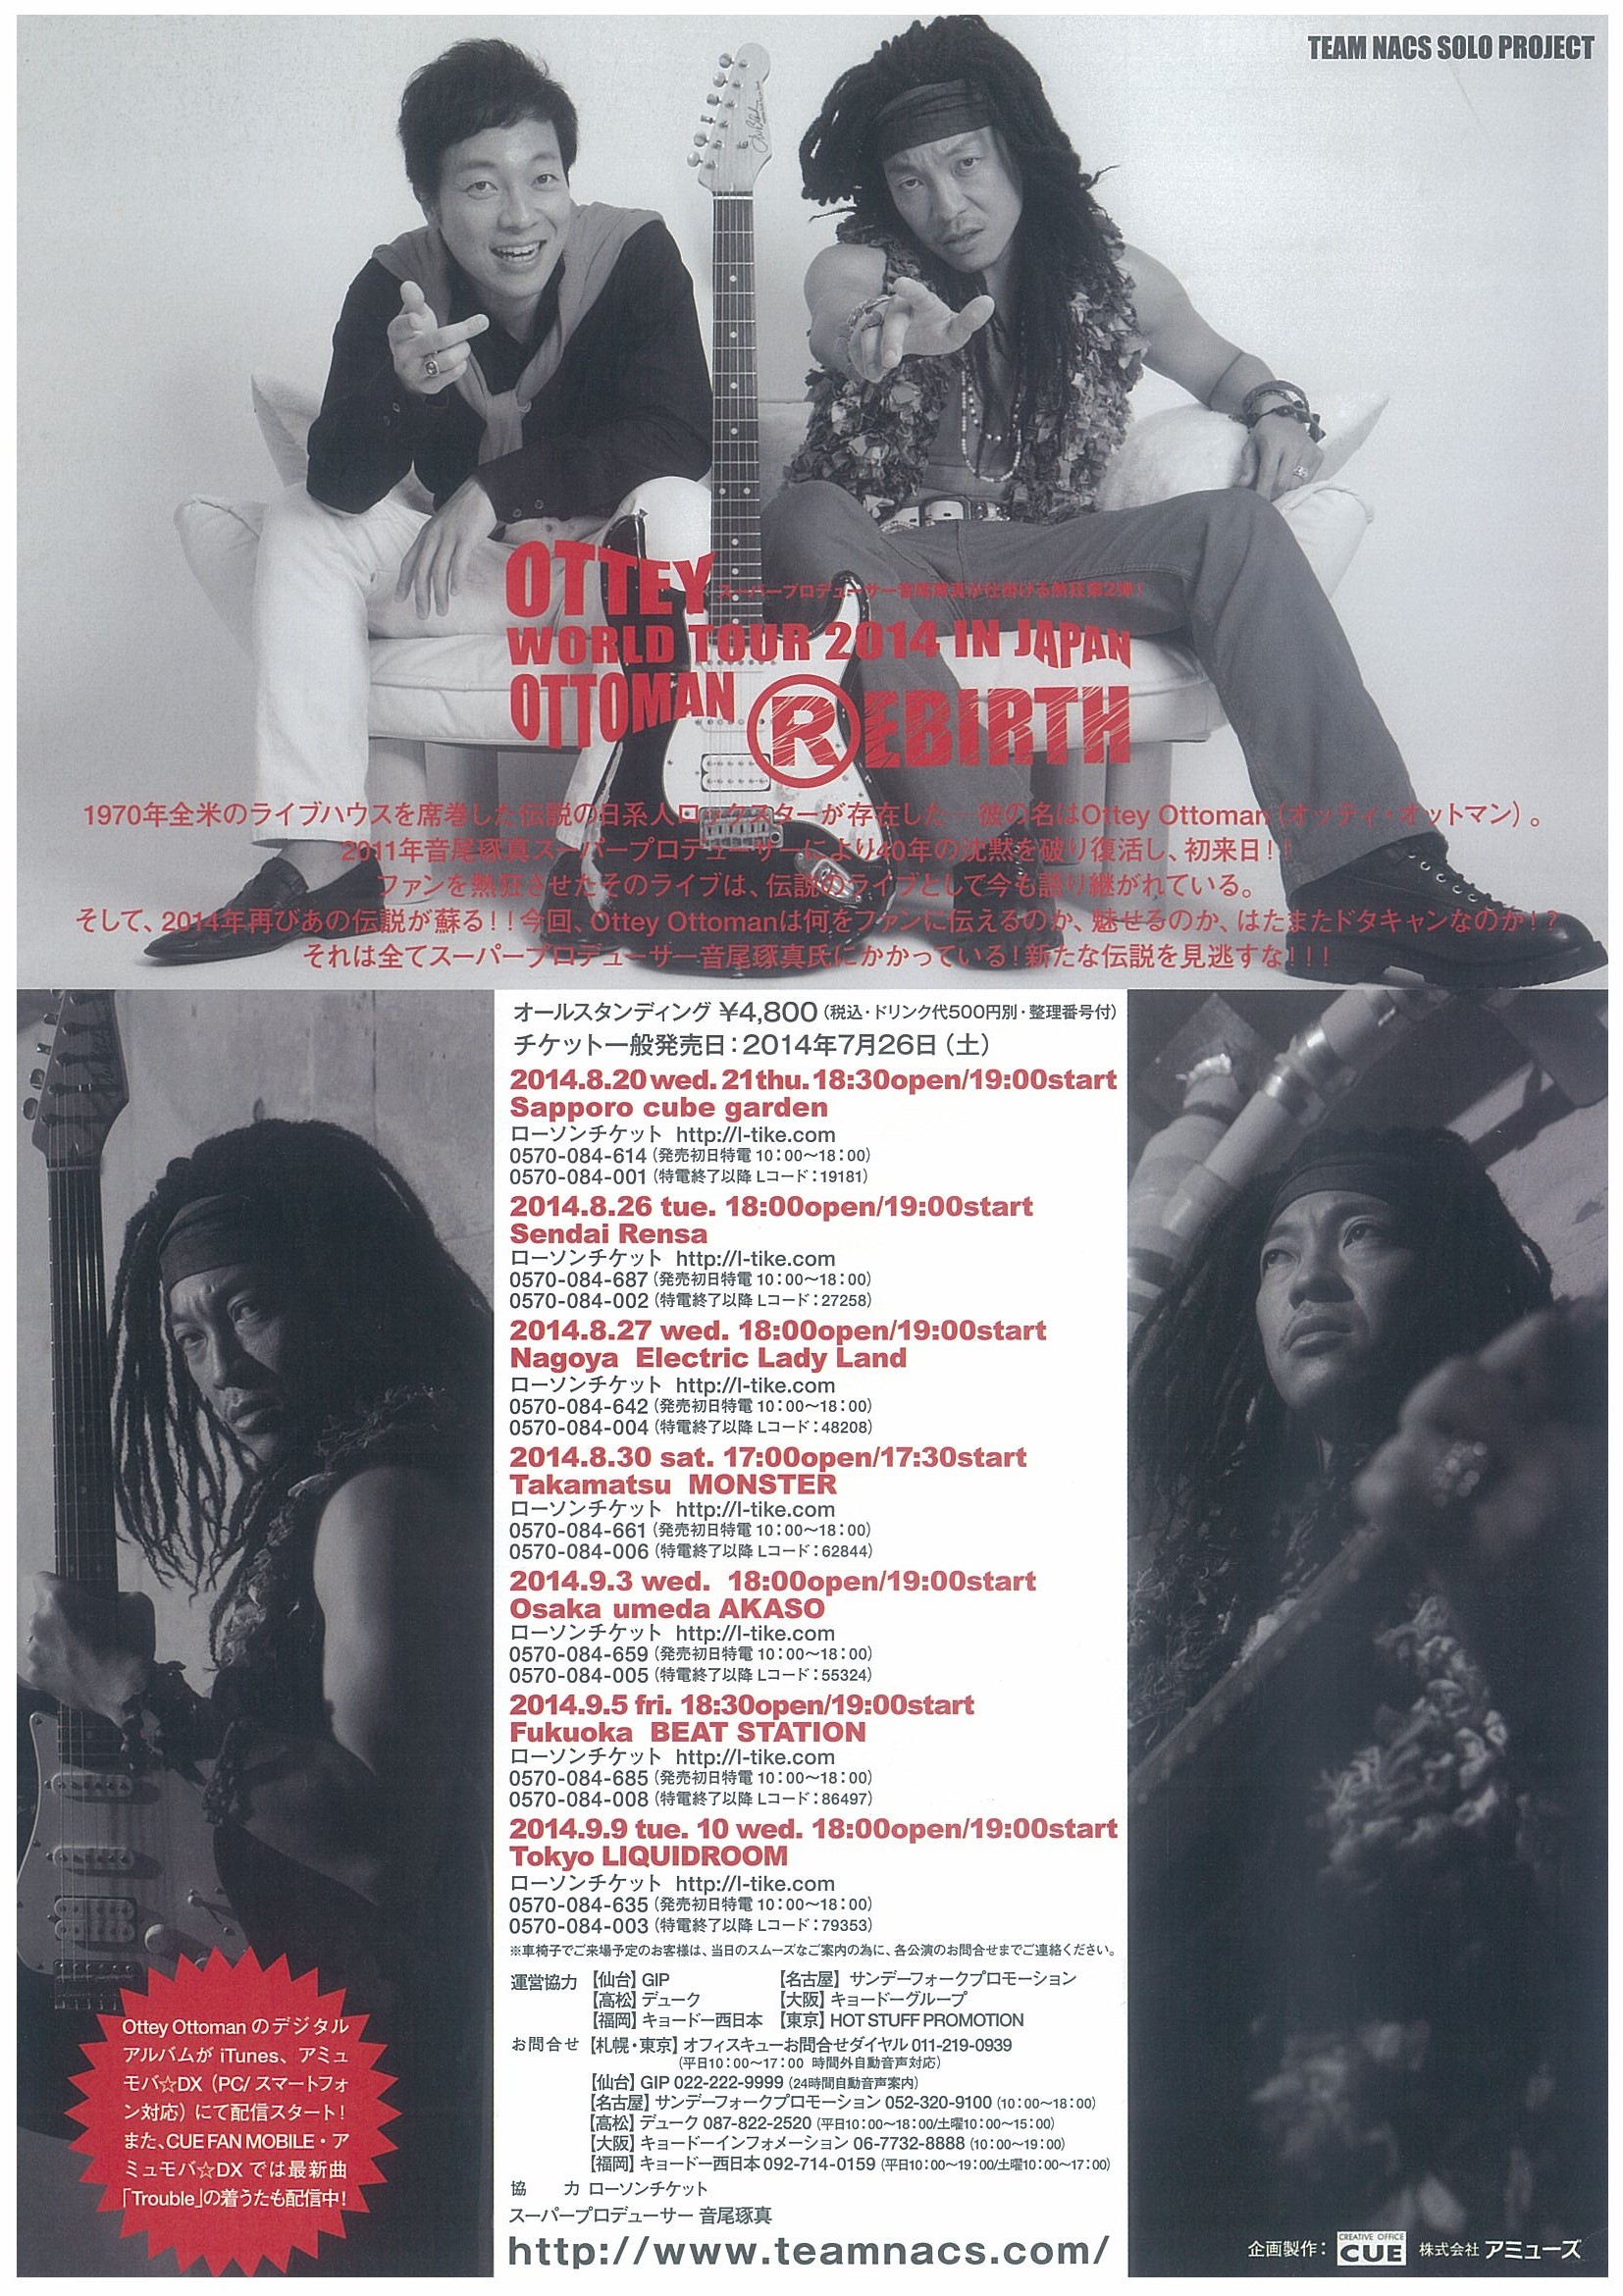 TEAM NACS SOLO PROJECT「Ottey Ottoman WORLD TOUR 2014 in JAPAN『REBIRTH』」